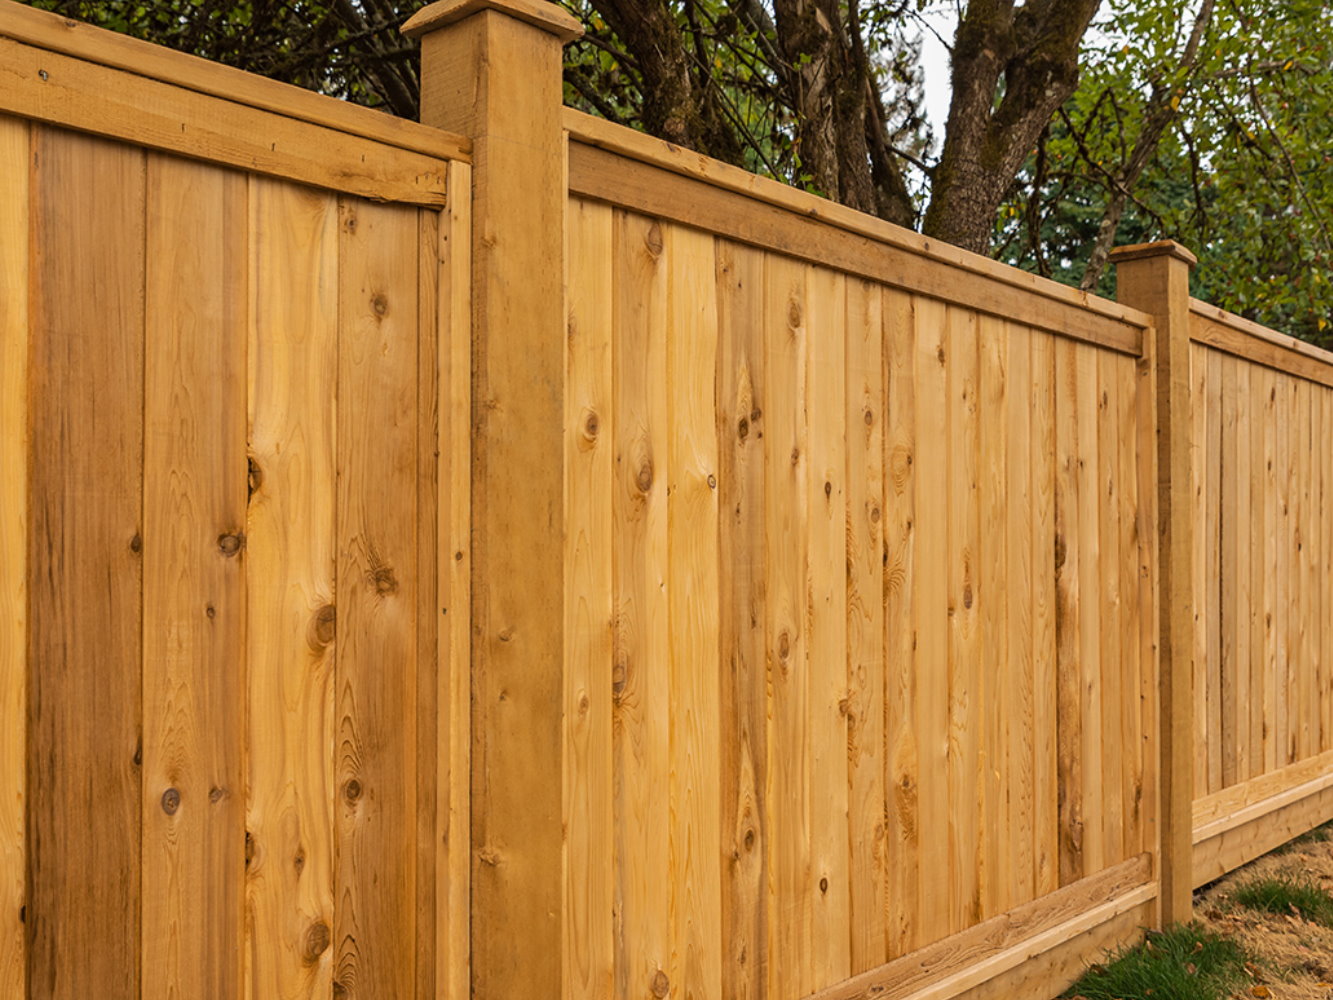 Midlothian VA cap and trim style wood fence